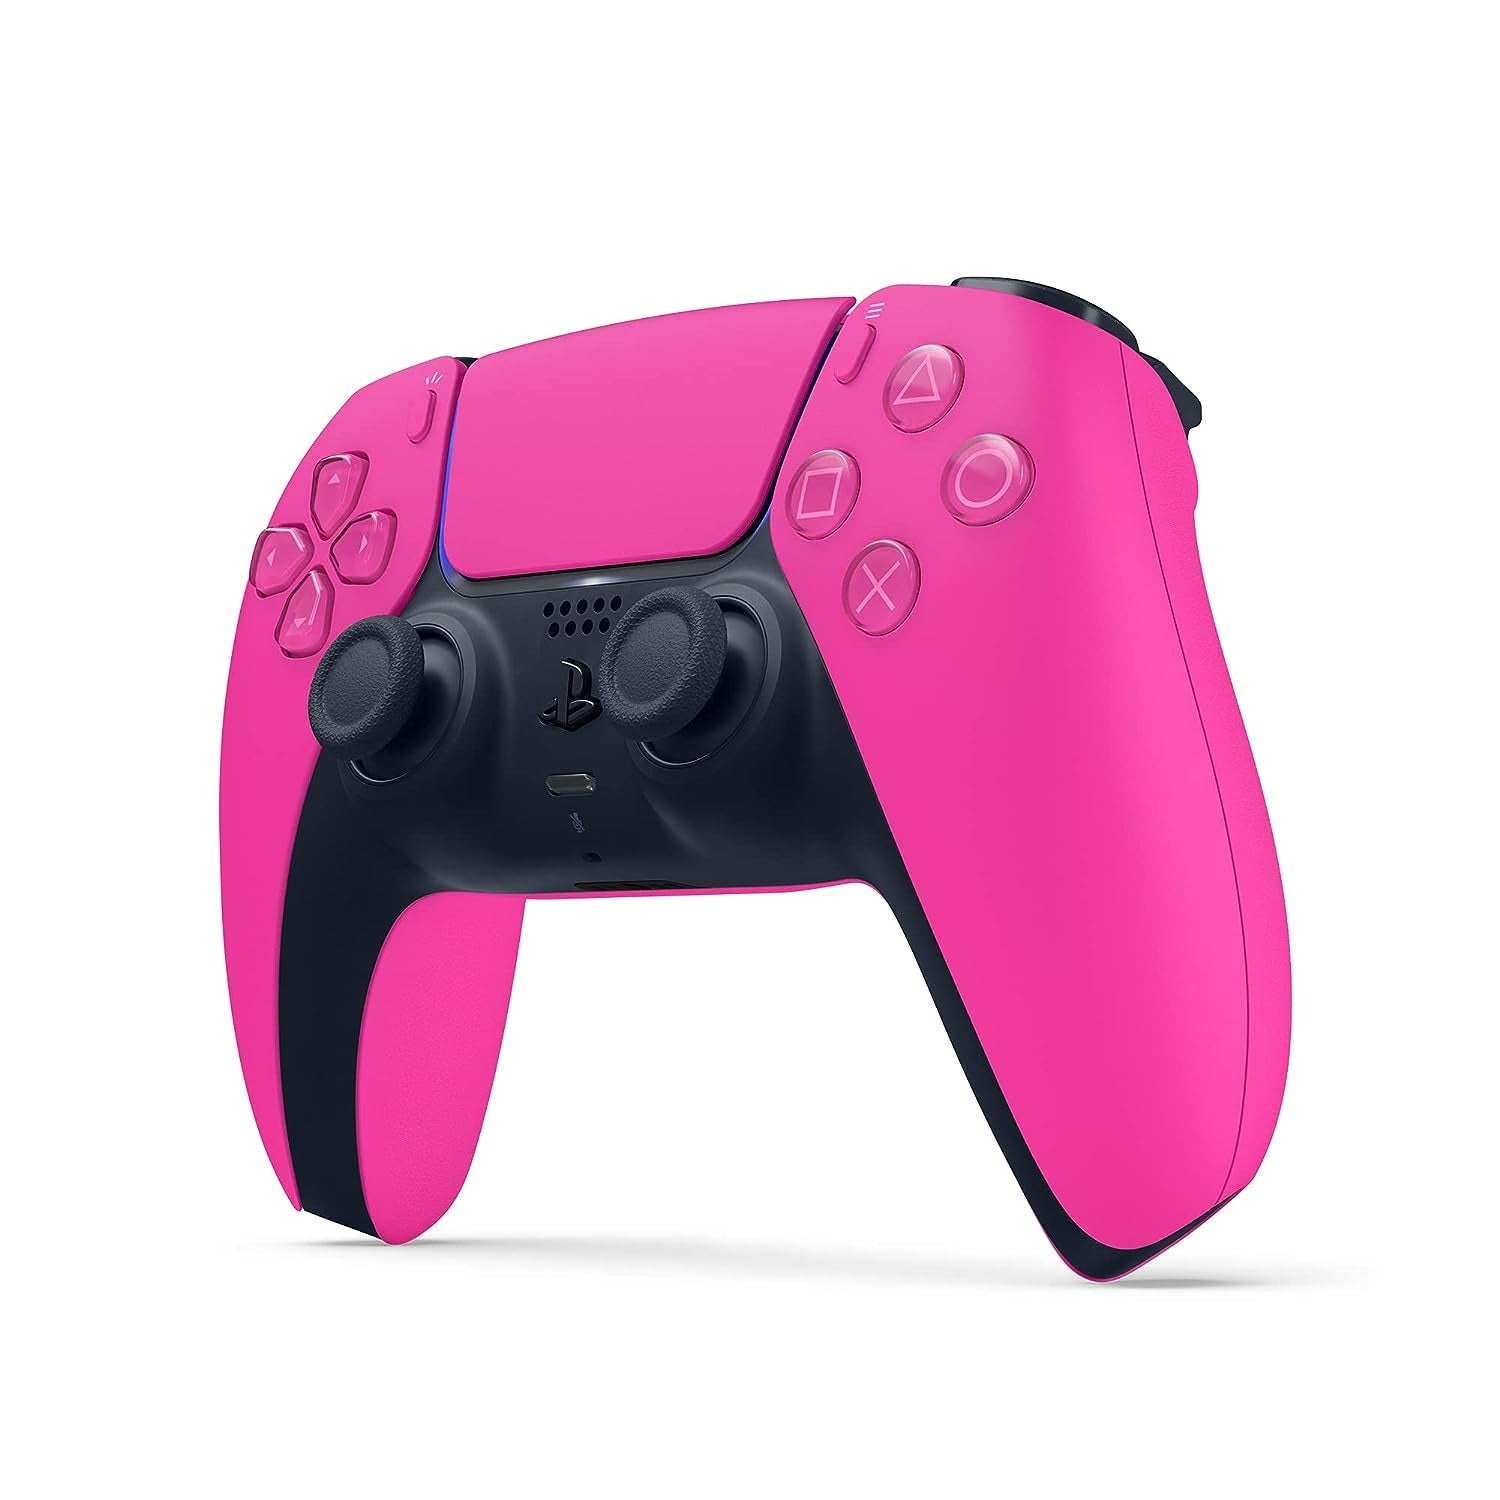 Sony Playstation 5 DualSense Wireless Controller - Nova Pink (Refurbished)